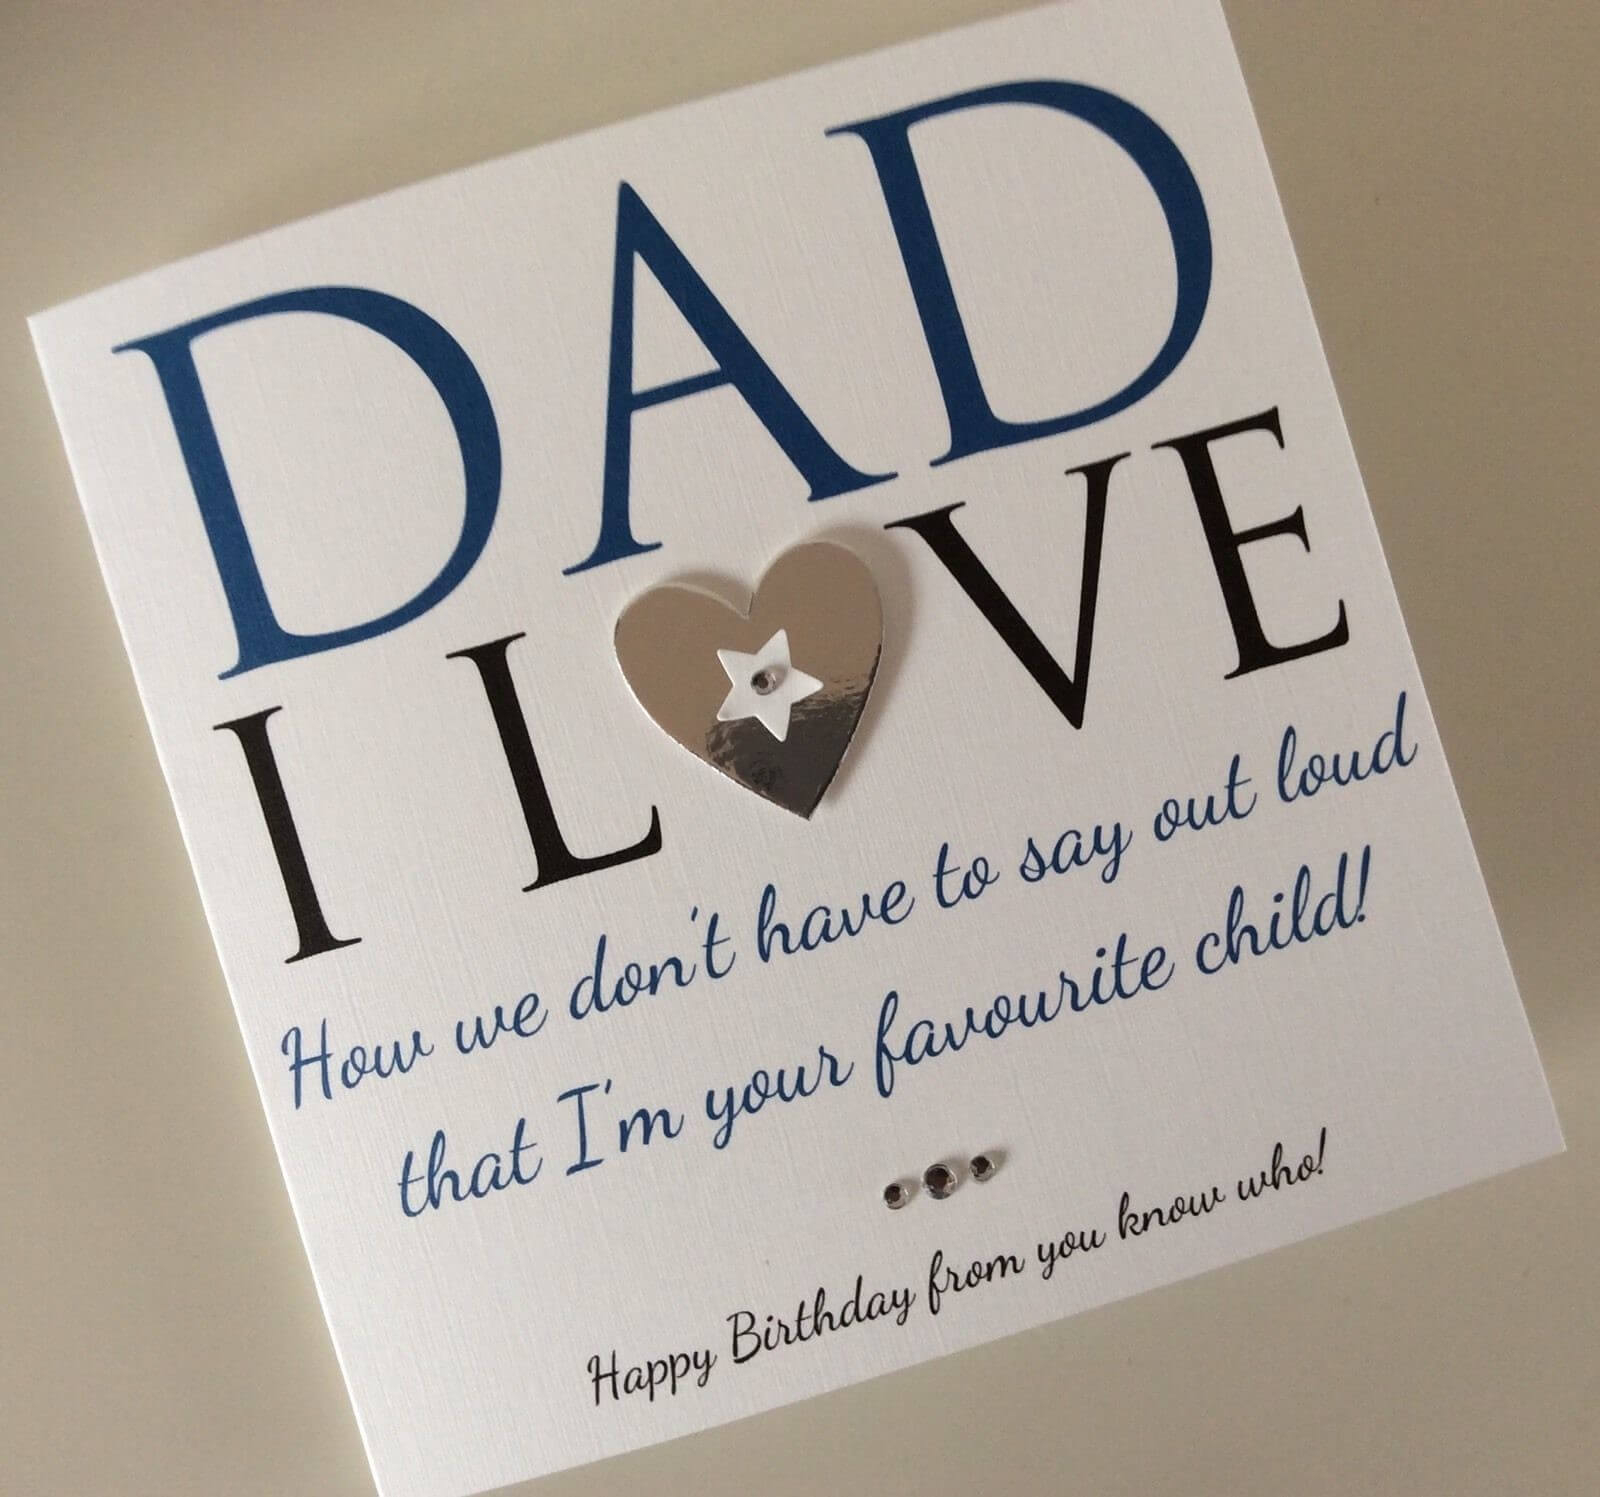 Homemade Birthday Cards For Dad Ideas 98 Birthday Greetings Cards For Dad Dad Birthday Card From Kids